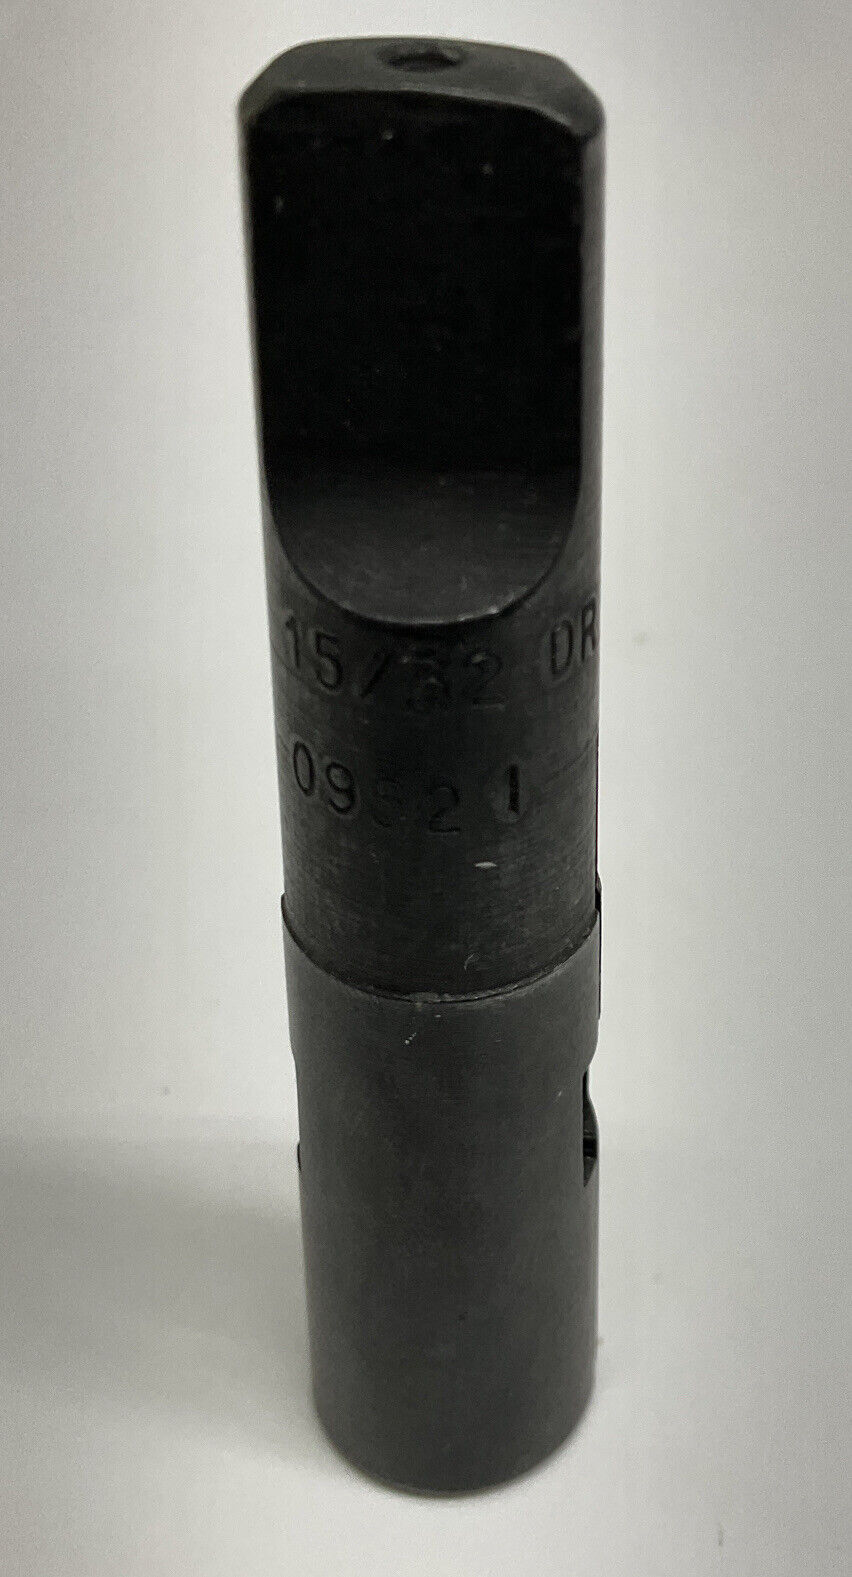 Scully Jones 09521 Split Sleeve 15/32" Drill Driver Morse Taper (YE241)